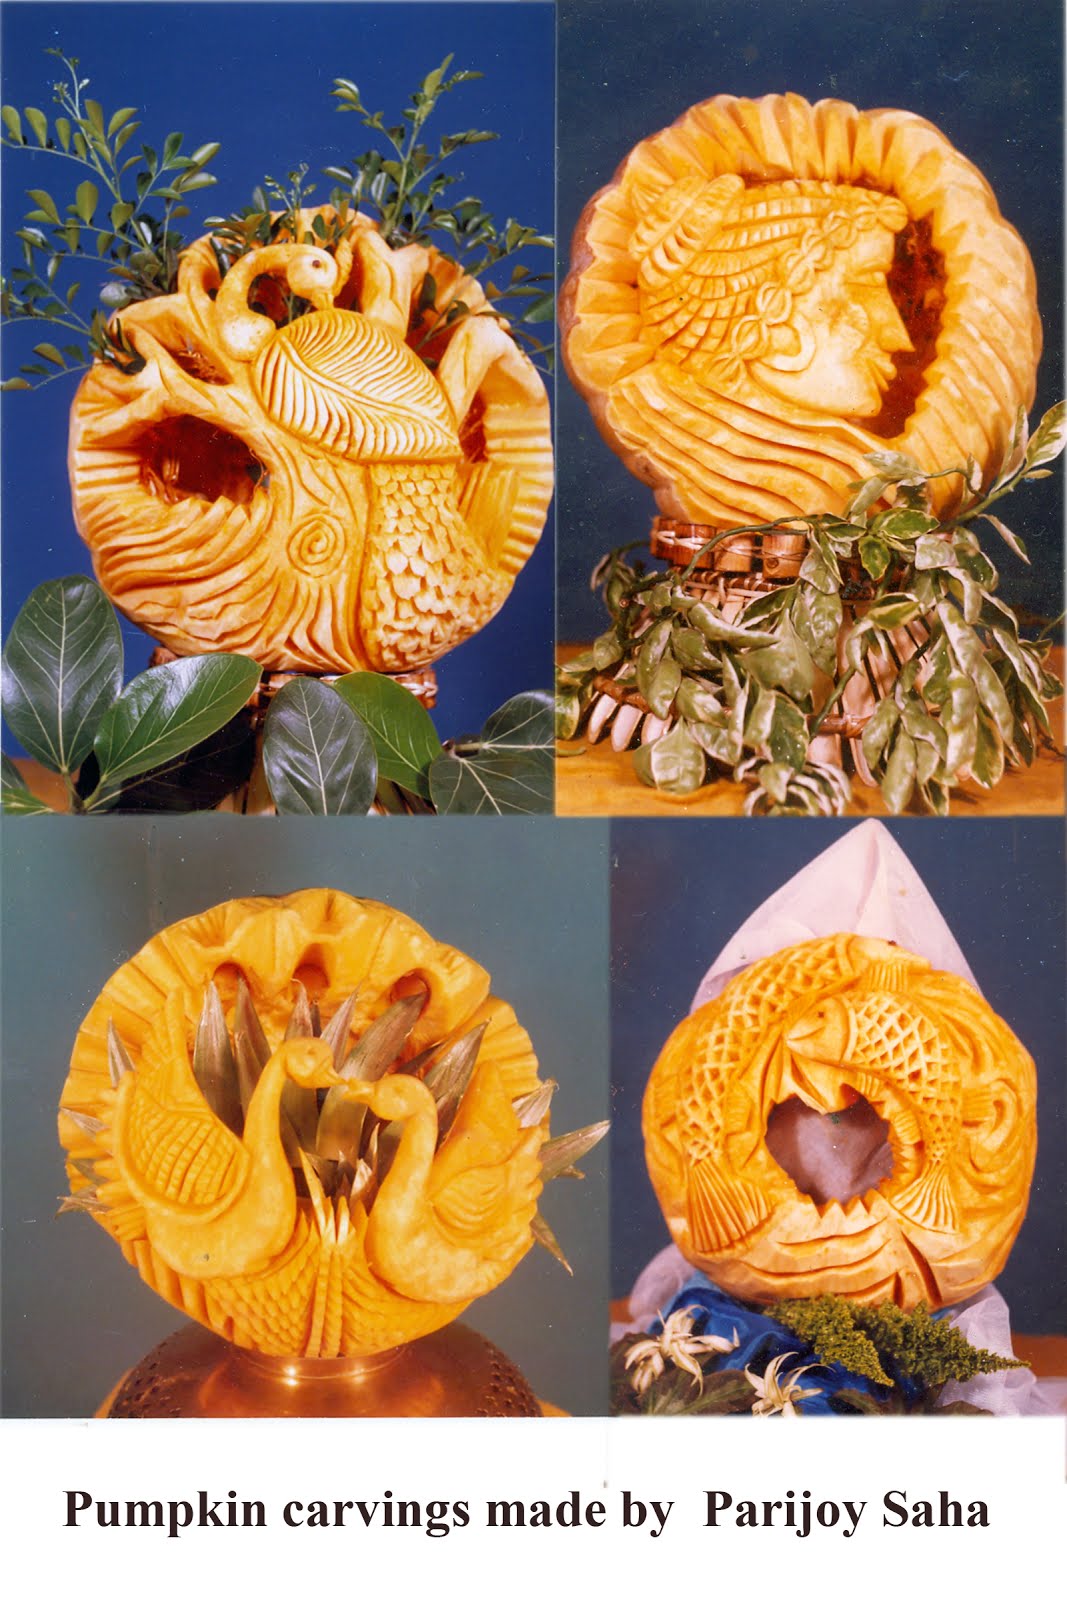 Pumpkin carvings made by Parijoy Saha.